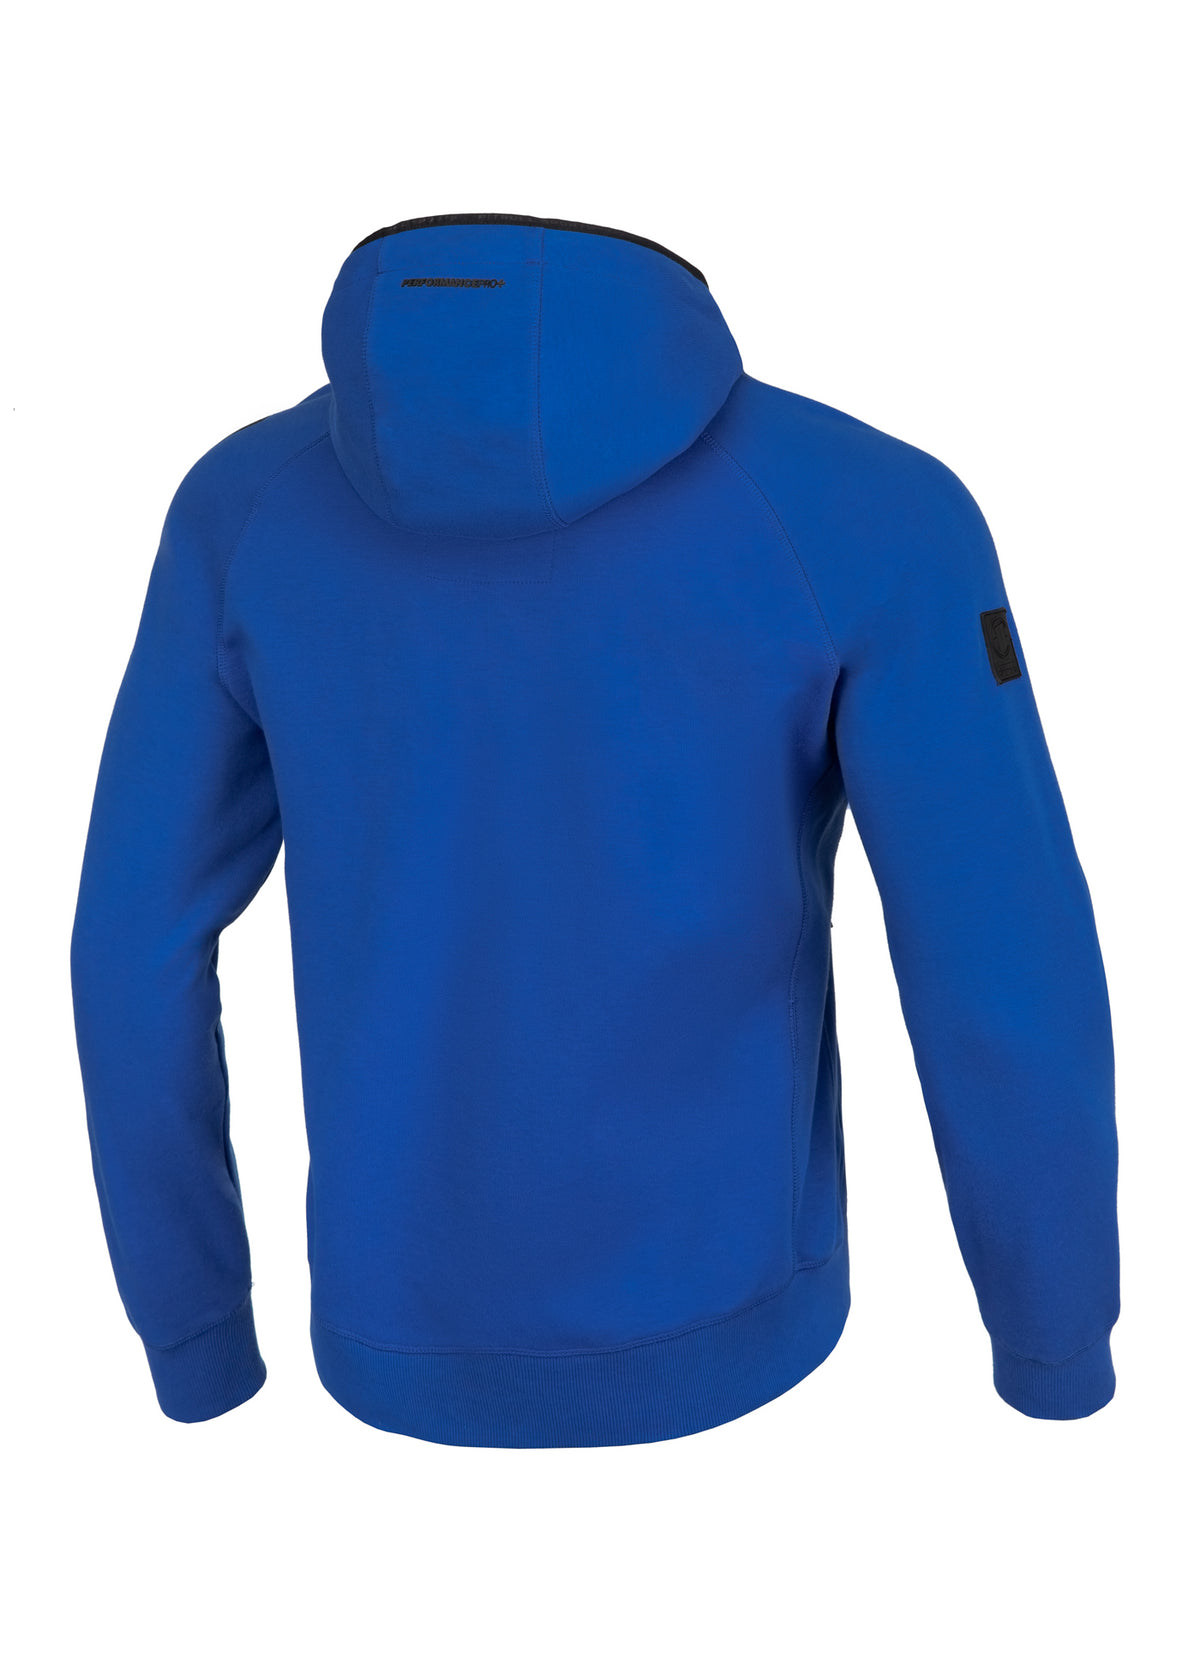 Hooded Sweatjacket HARRIS Royal Blue - Pitbull West Coast International Store 